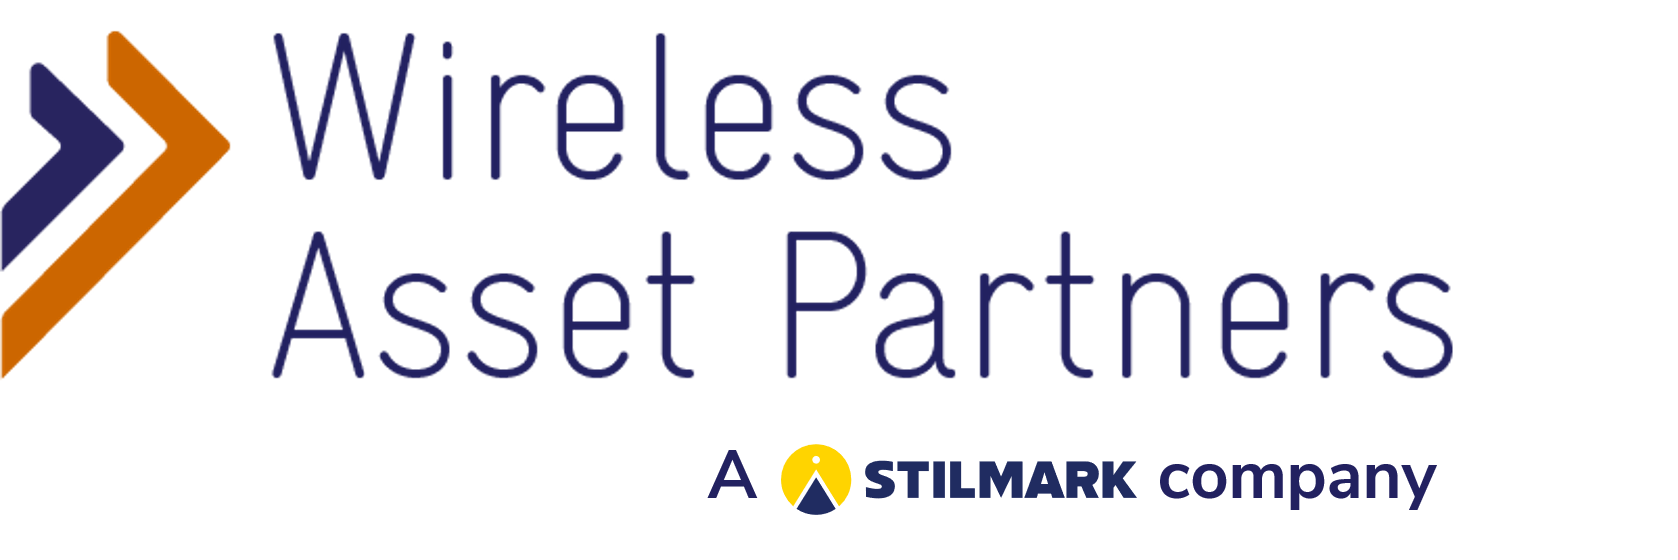 Wireless Asset Partners